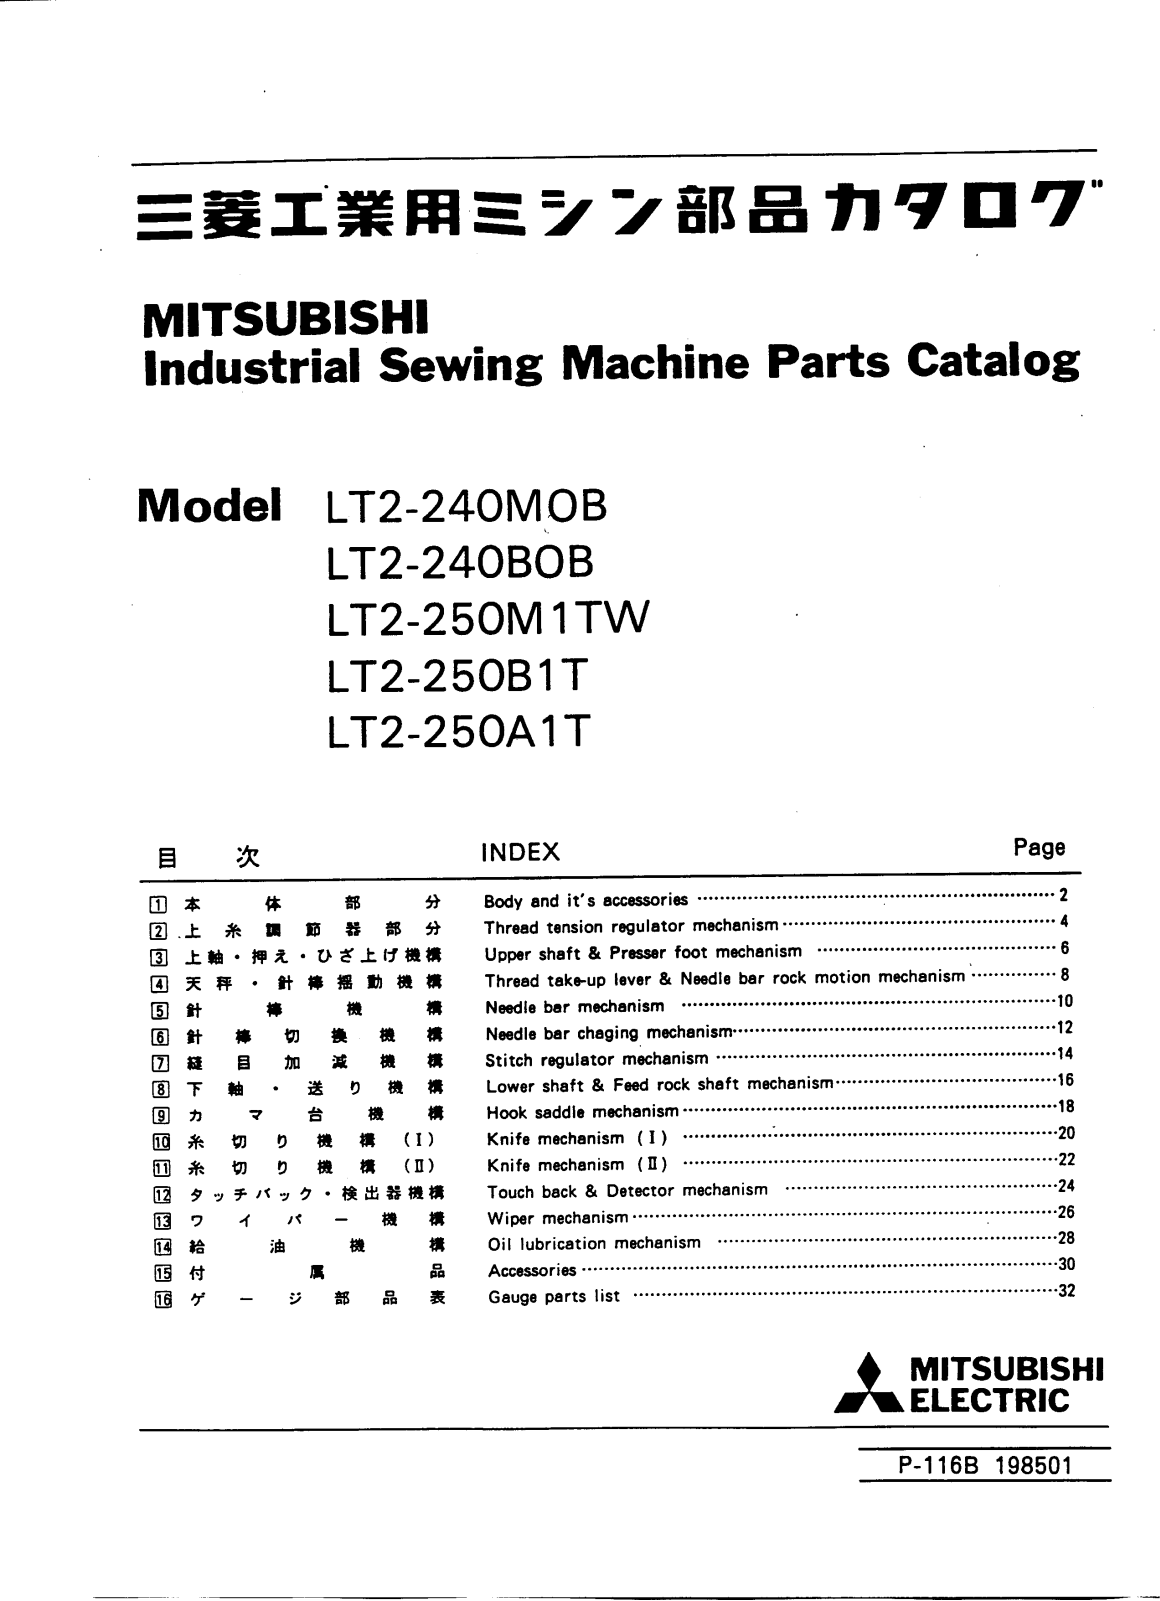 MITSUBISHI LT2-240M0B, LT2-240B0B, LT2-250M1TW, LT2-250B1T, LT2-250A1T Parts List